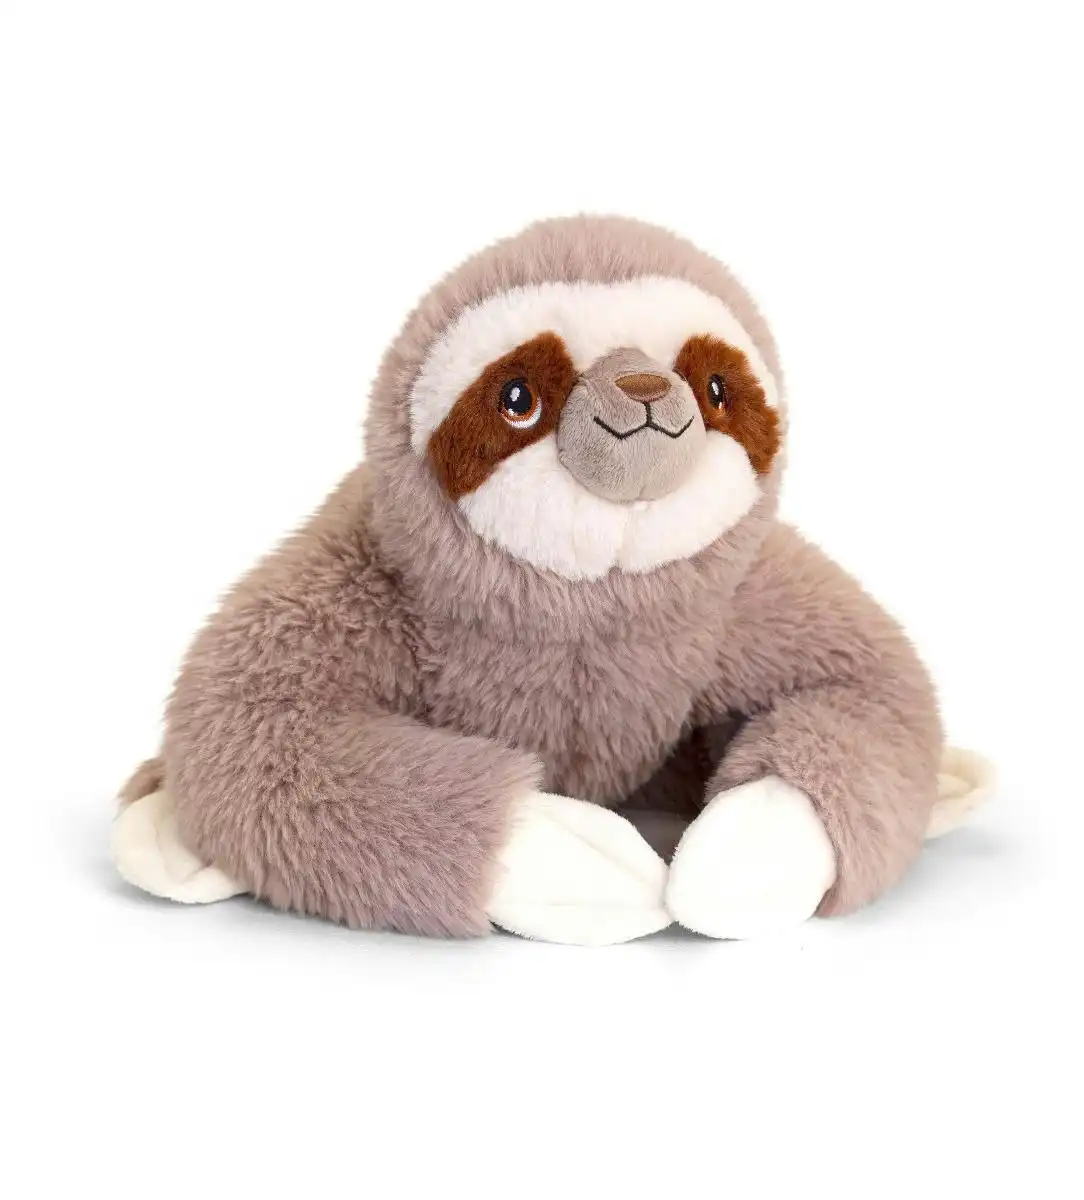 Keeleco 18cm Sloth Kids/Children Animal Soft Plush Stuffed Toy Brown 3y+